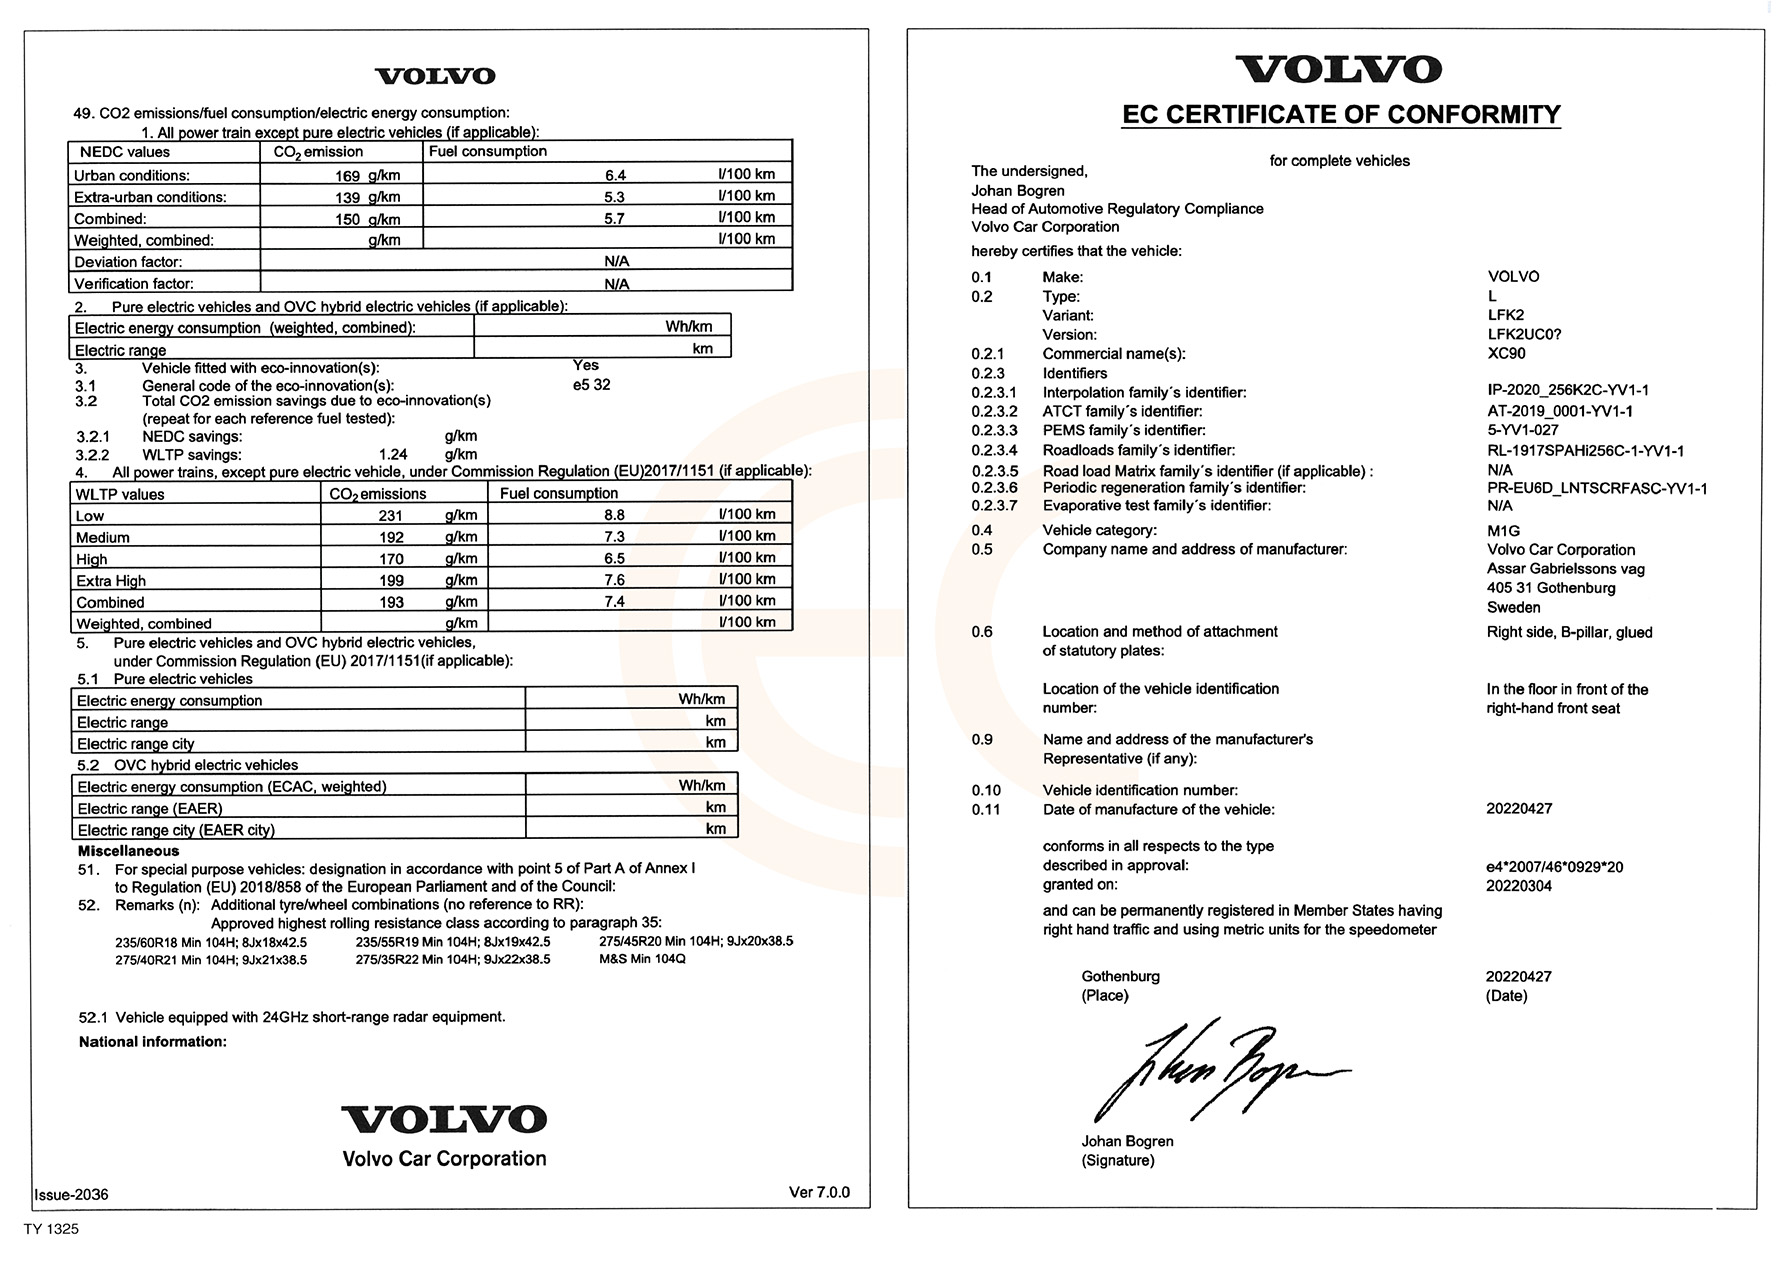 exemple de certificat de conformité Volvo